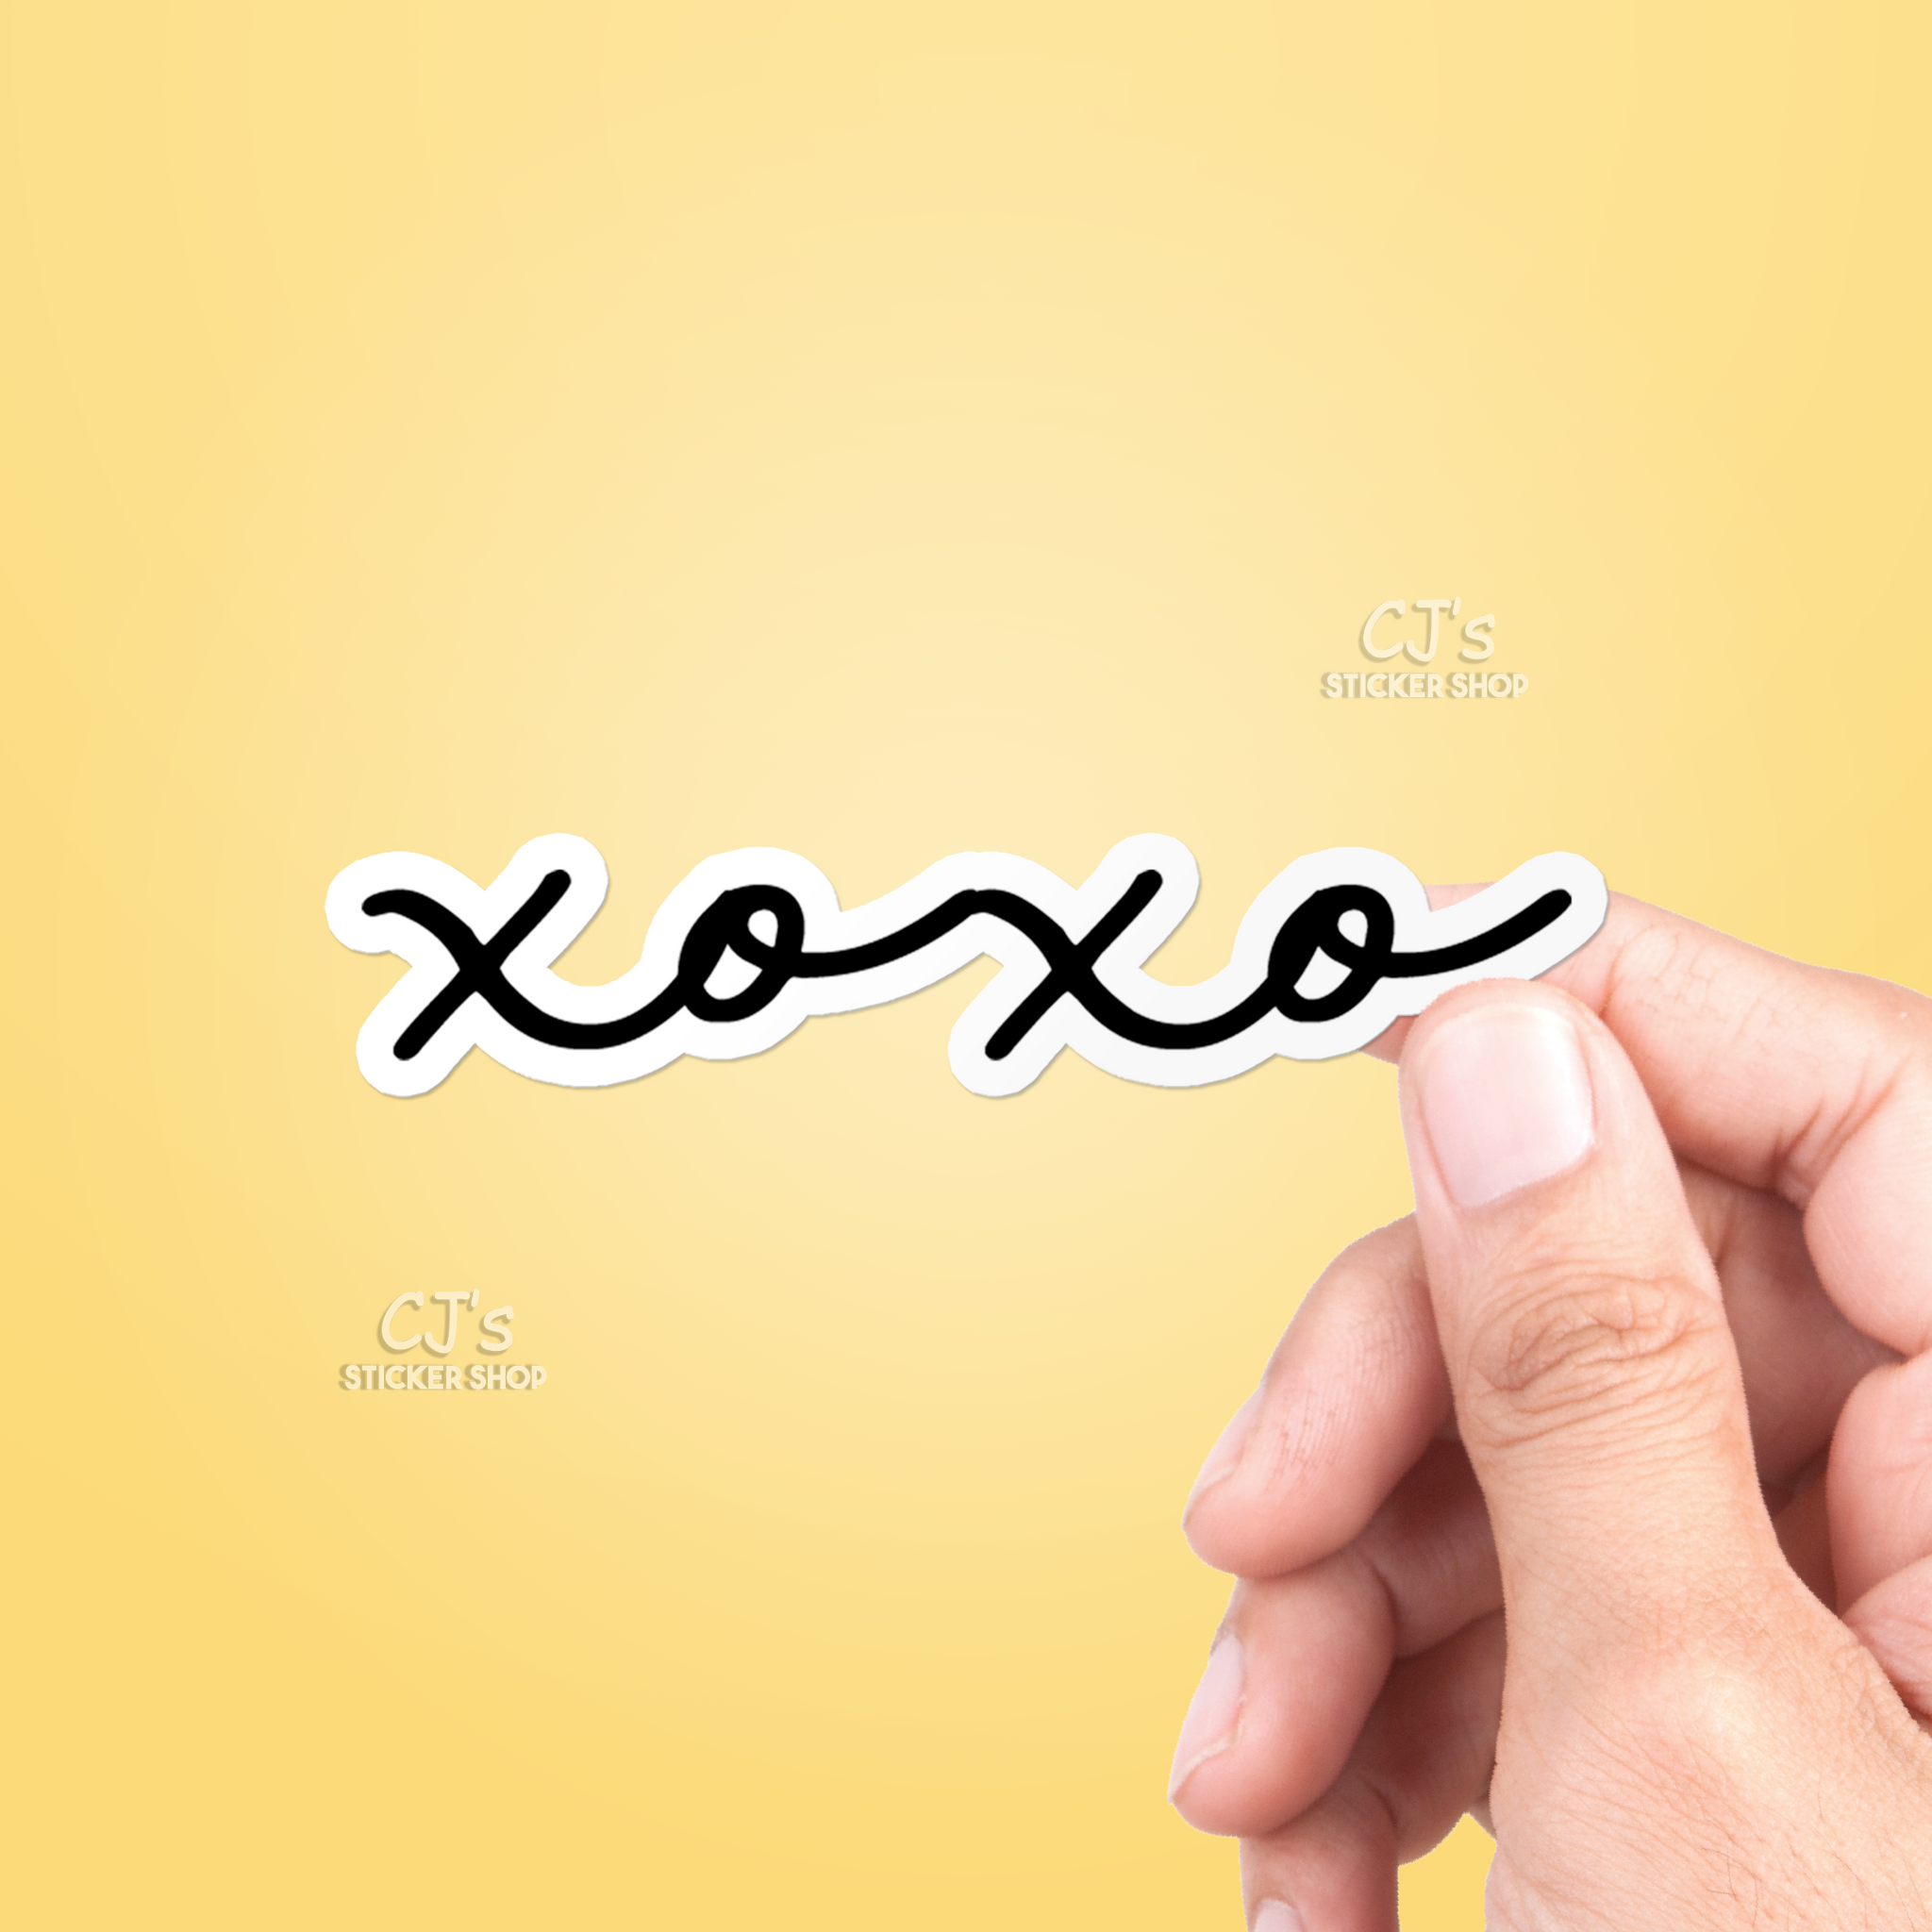 XOXO Sticker